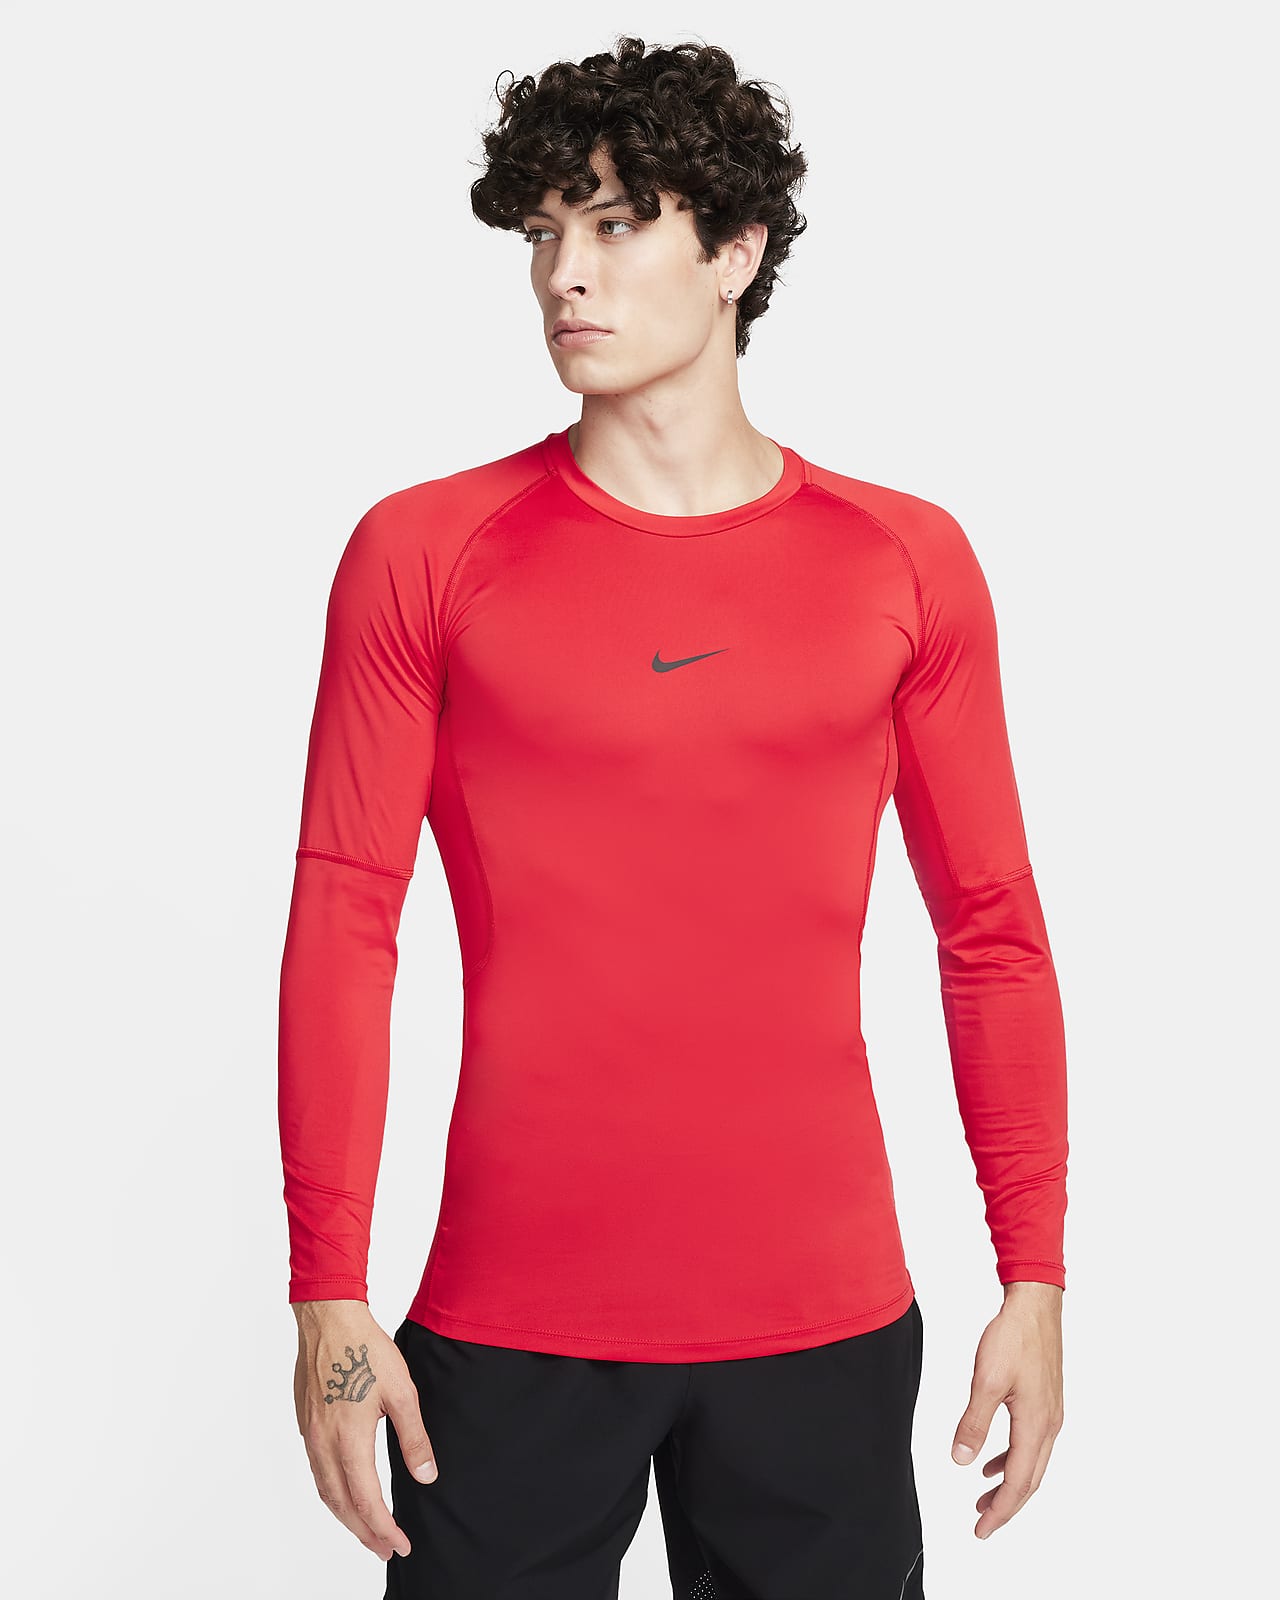 Pro Men's Tight Long-Sleeve Fitness Top. Nike LU